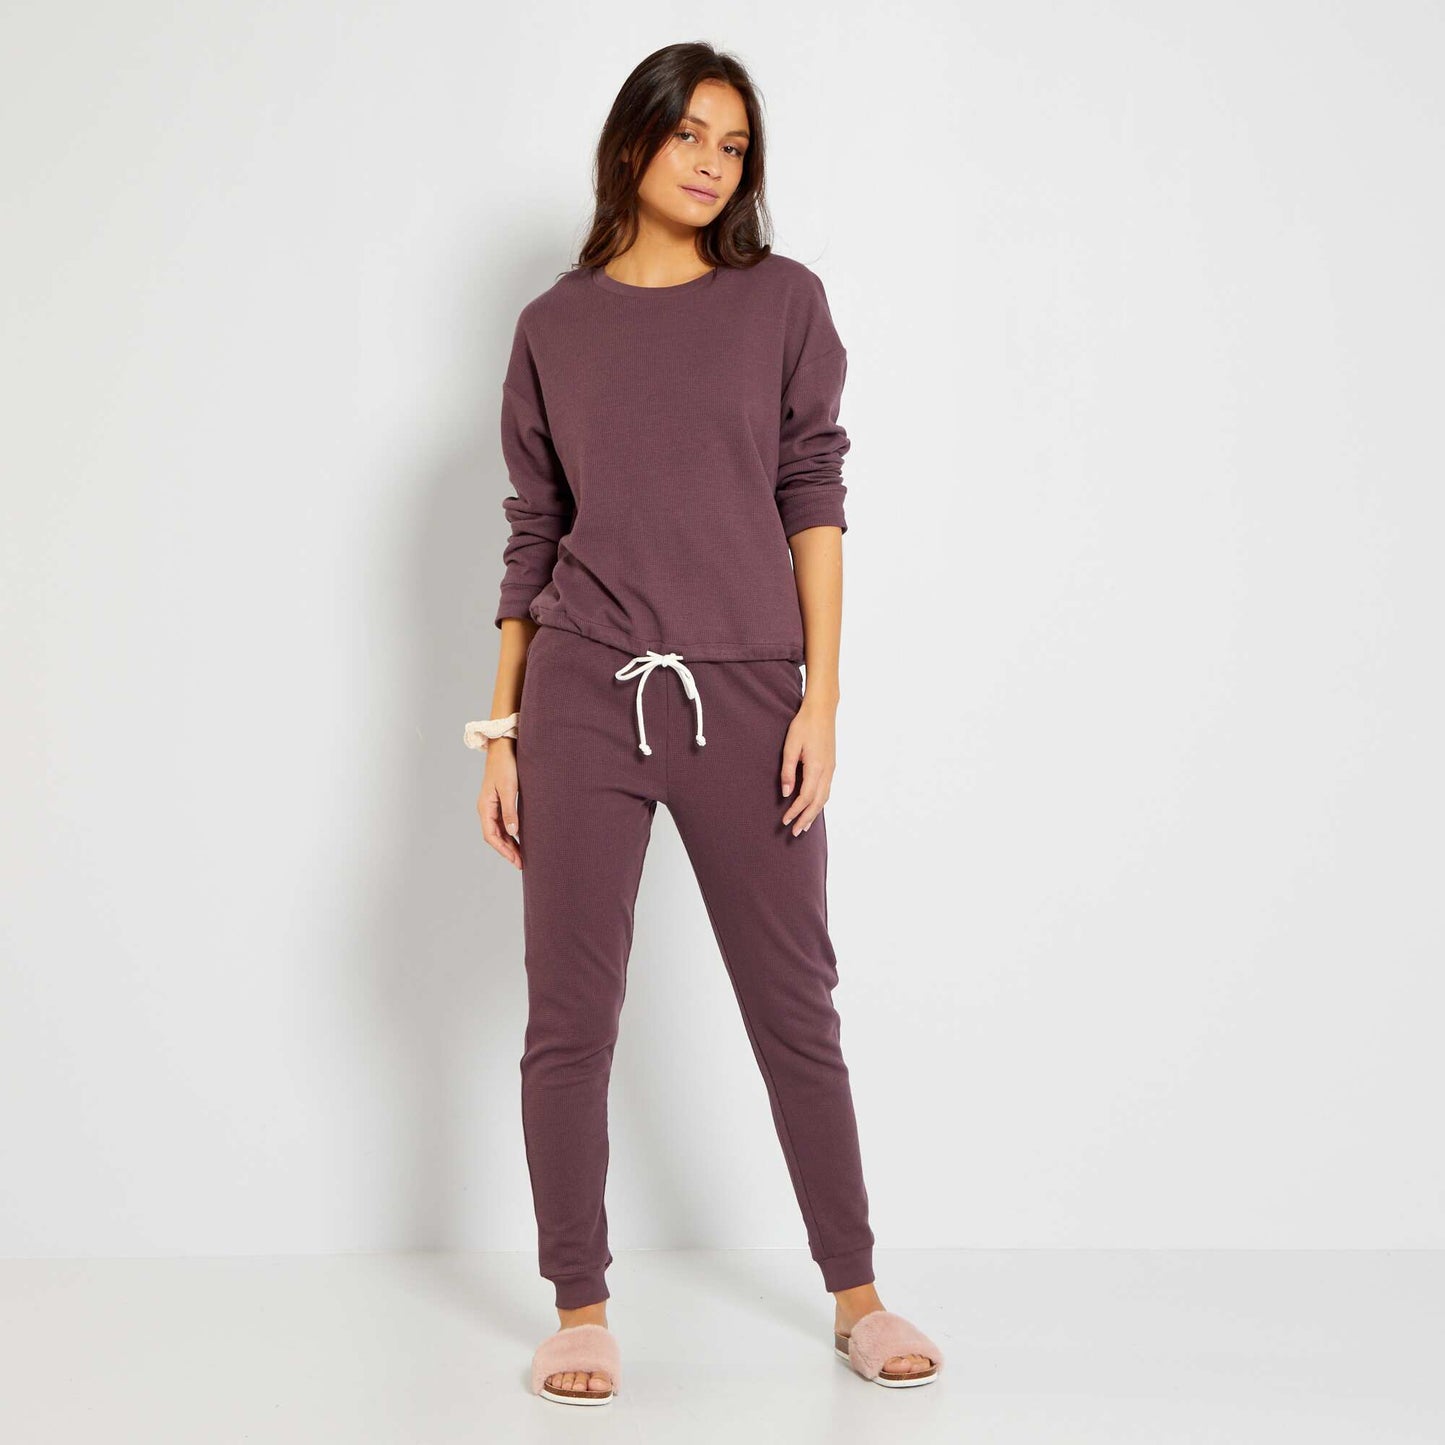 Long honeycomb knit pyjamas - Two-piece set dark prune